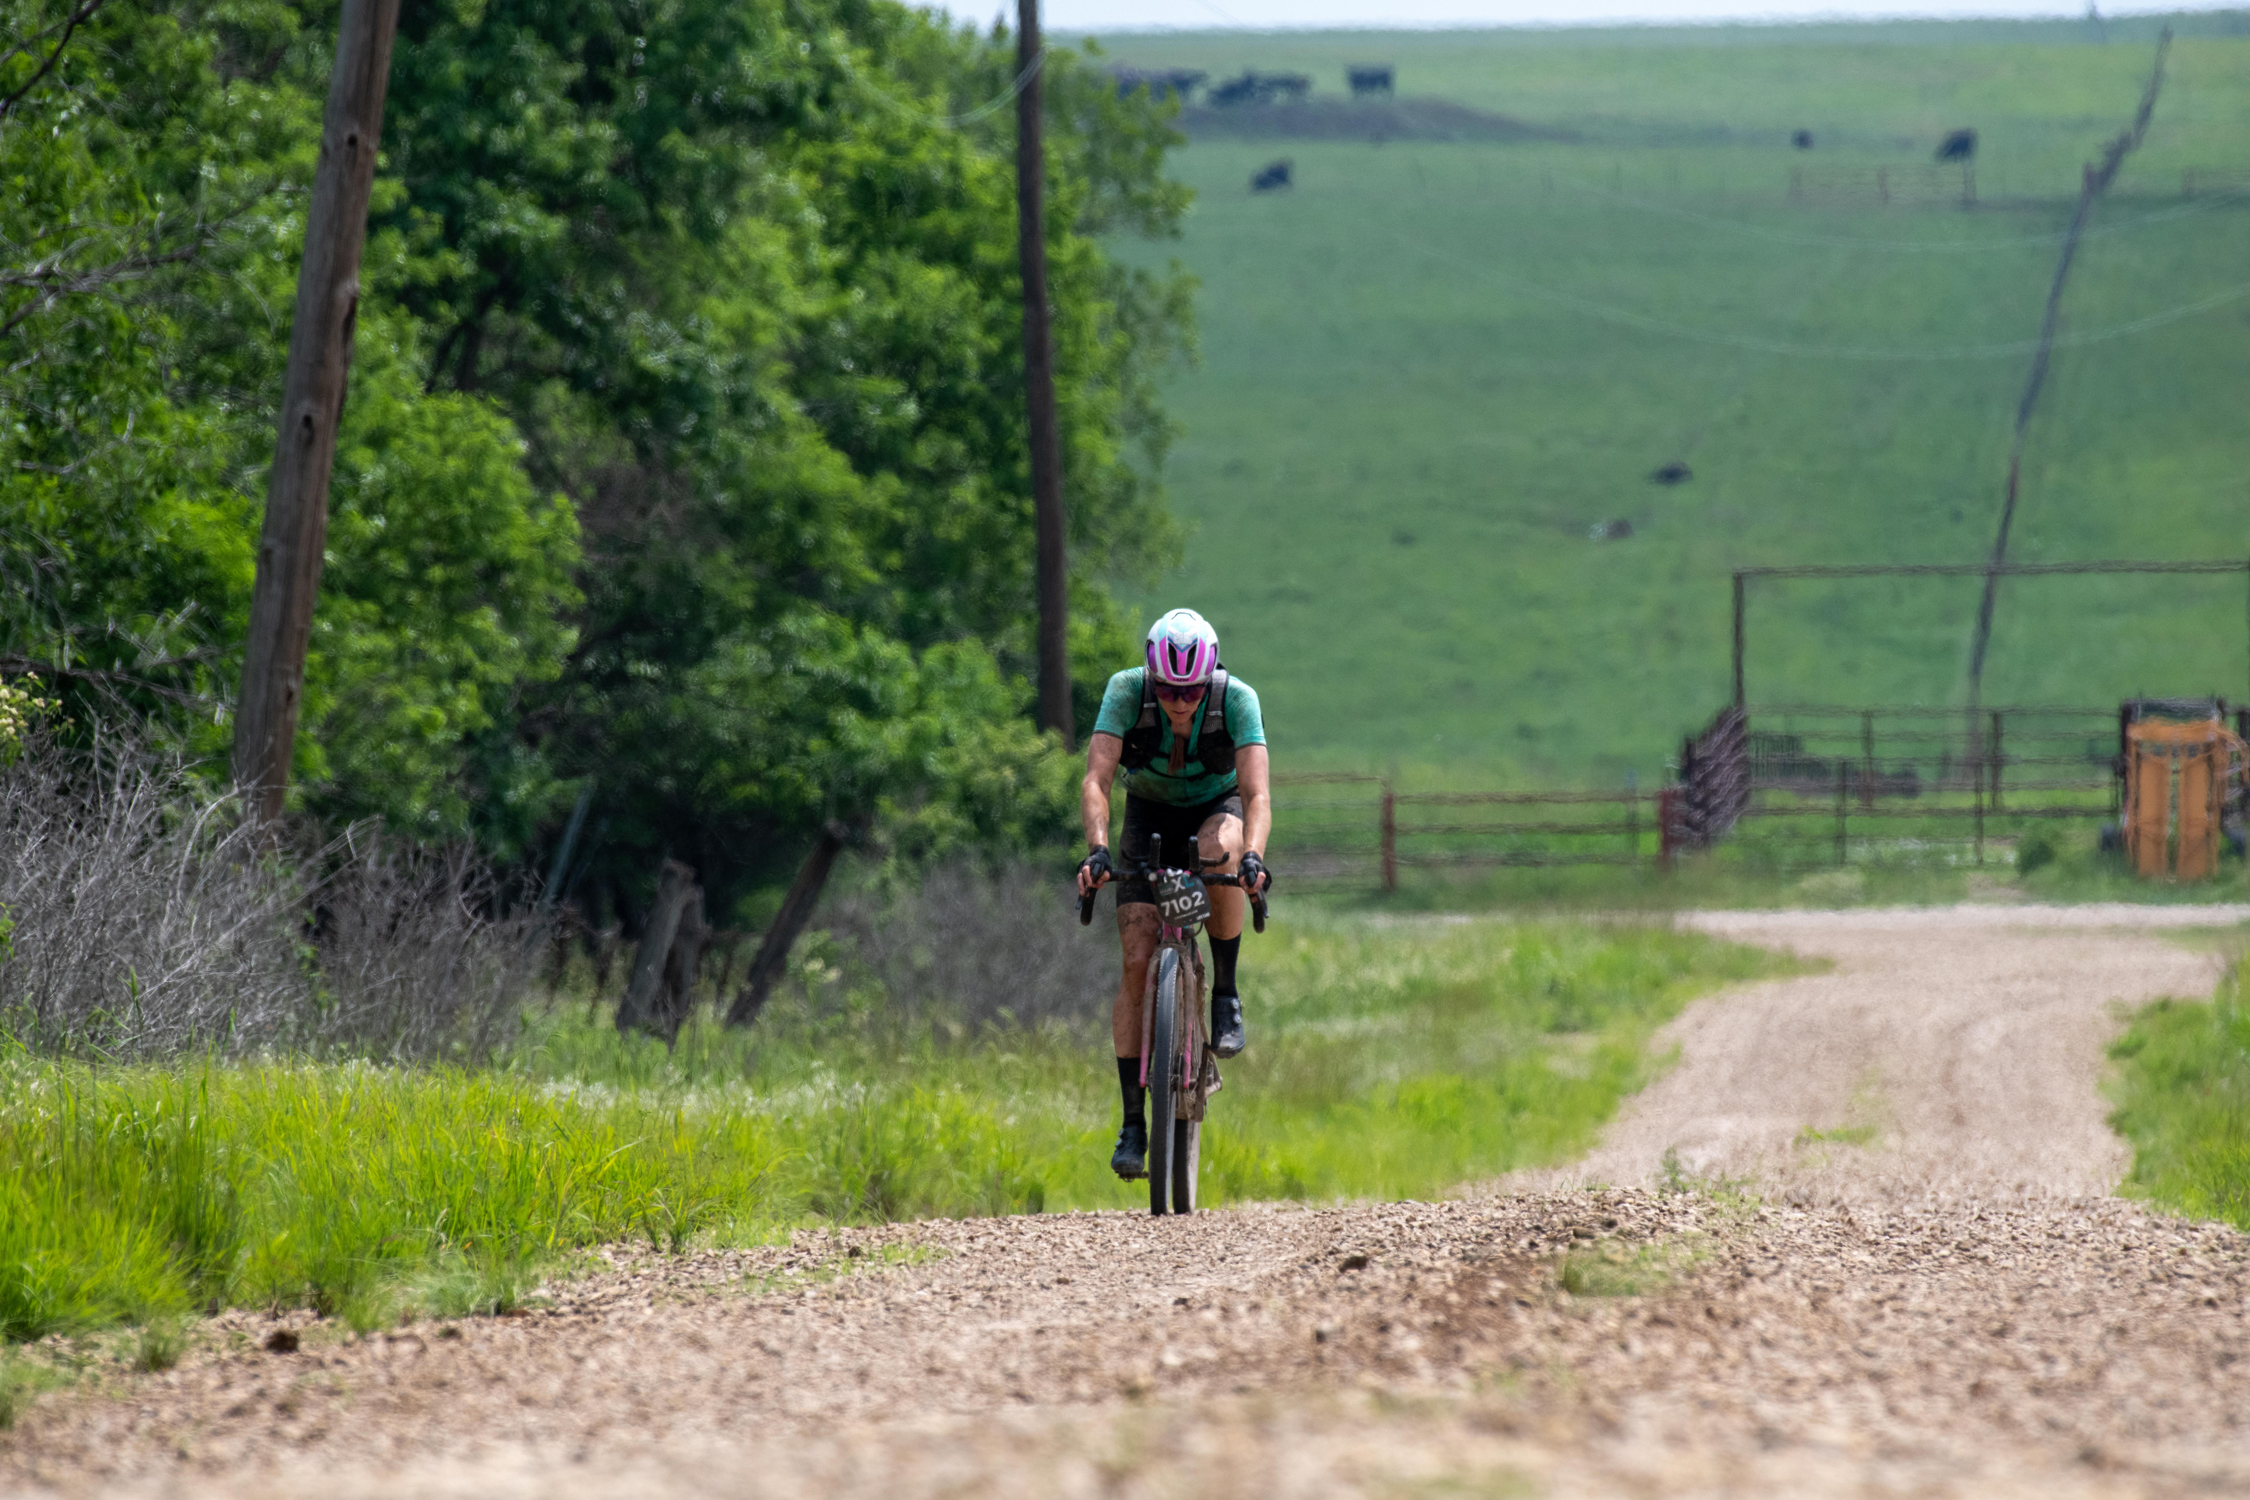 Kristen Legan racing the Unbound XL gravel bike race in Kansas